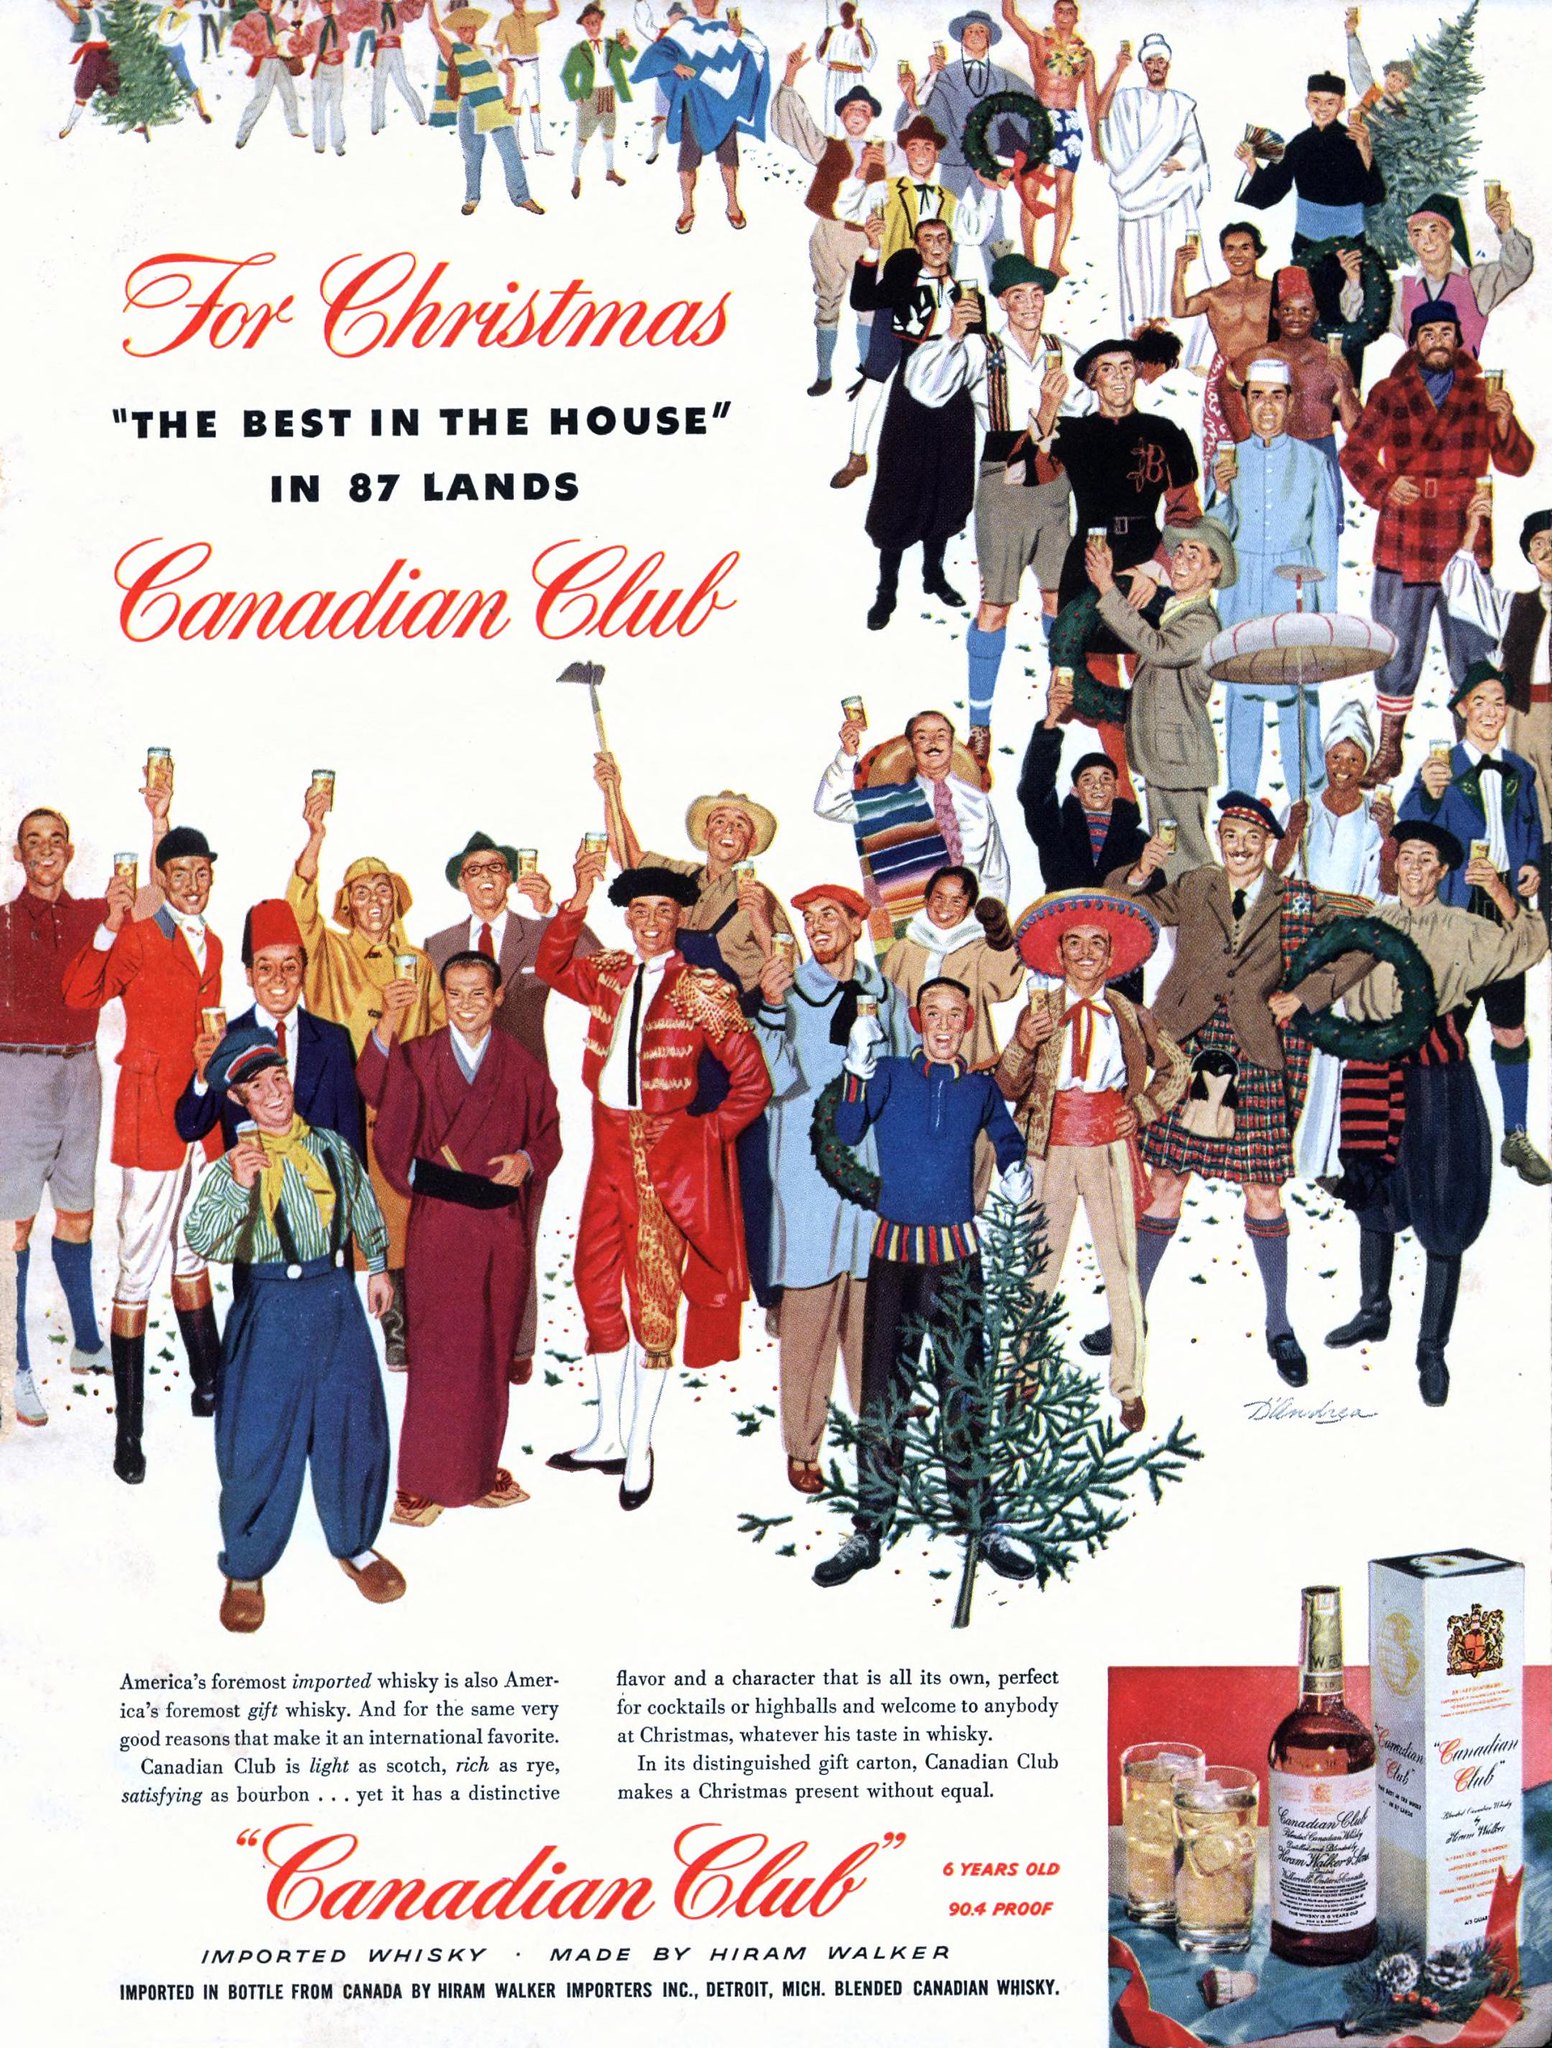 Canadian Club - published in Cosmopolitan (Vol. 135, No. 6) - December 1953